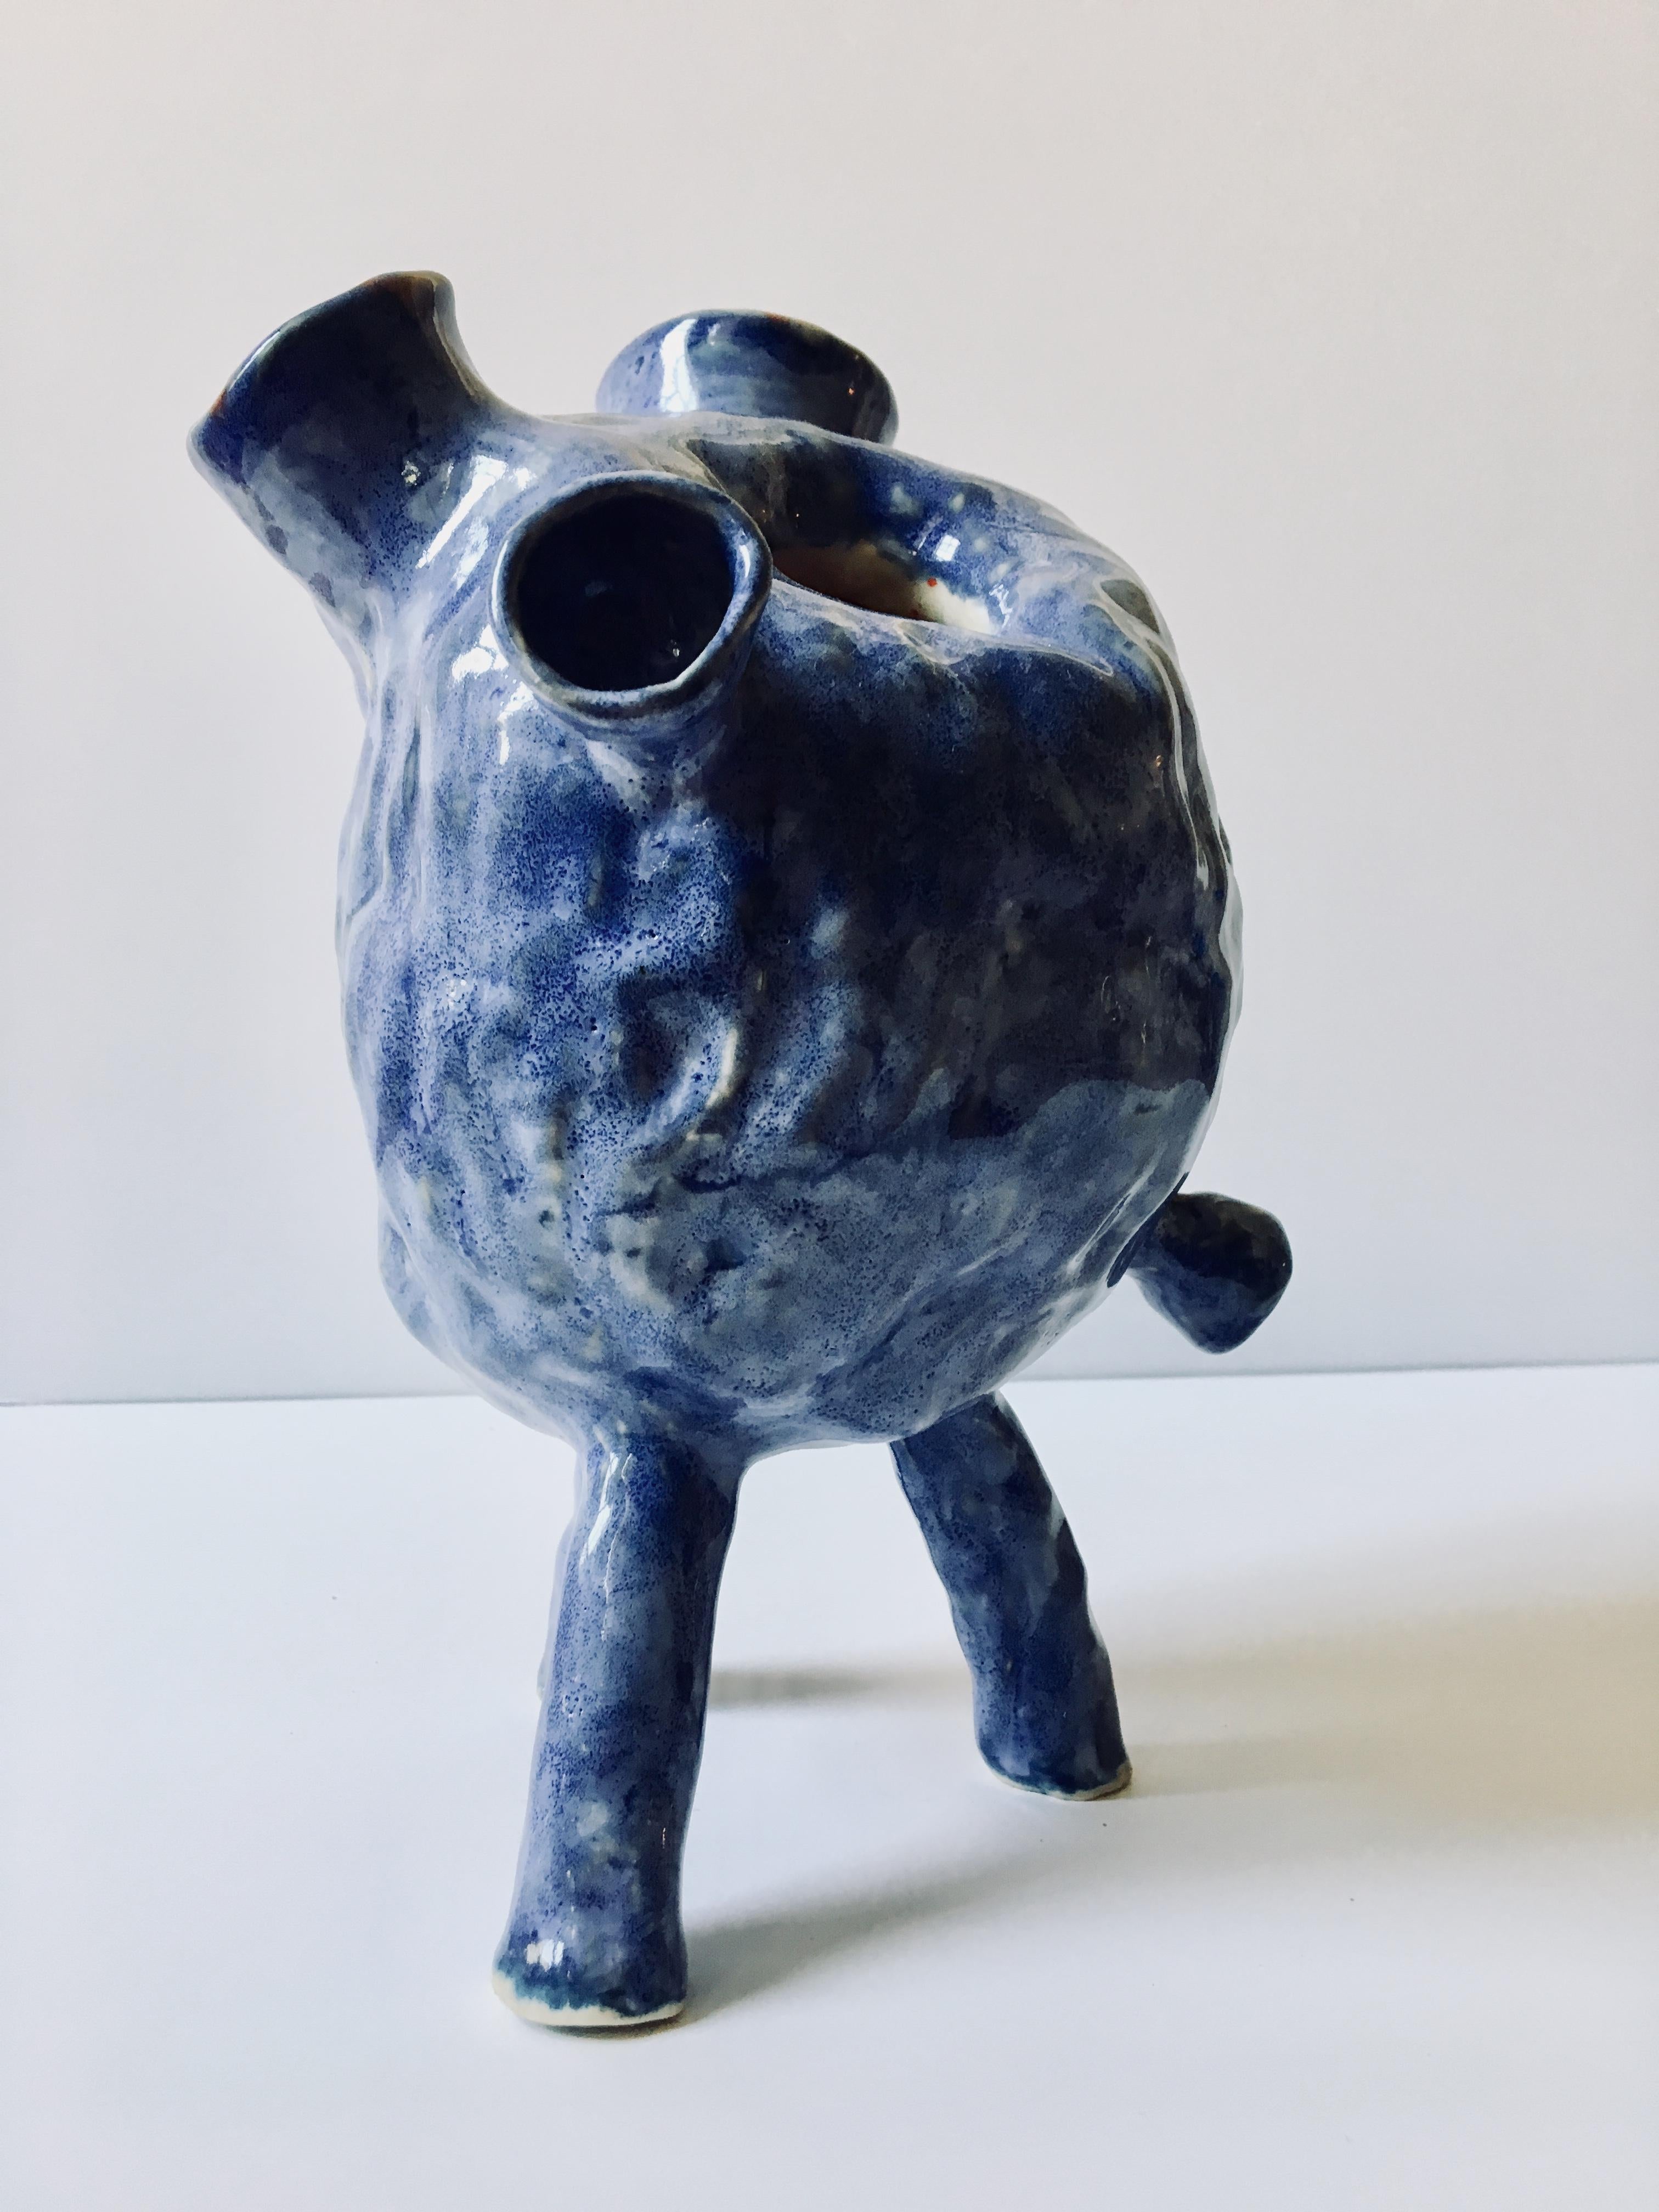 Sculpture ceramic vessel: Creature Medium No 4' - Gray Abstract Sculpture by Ak Jansen